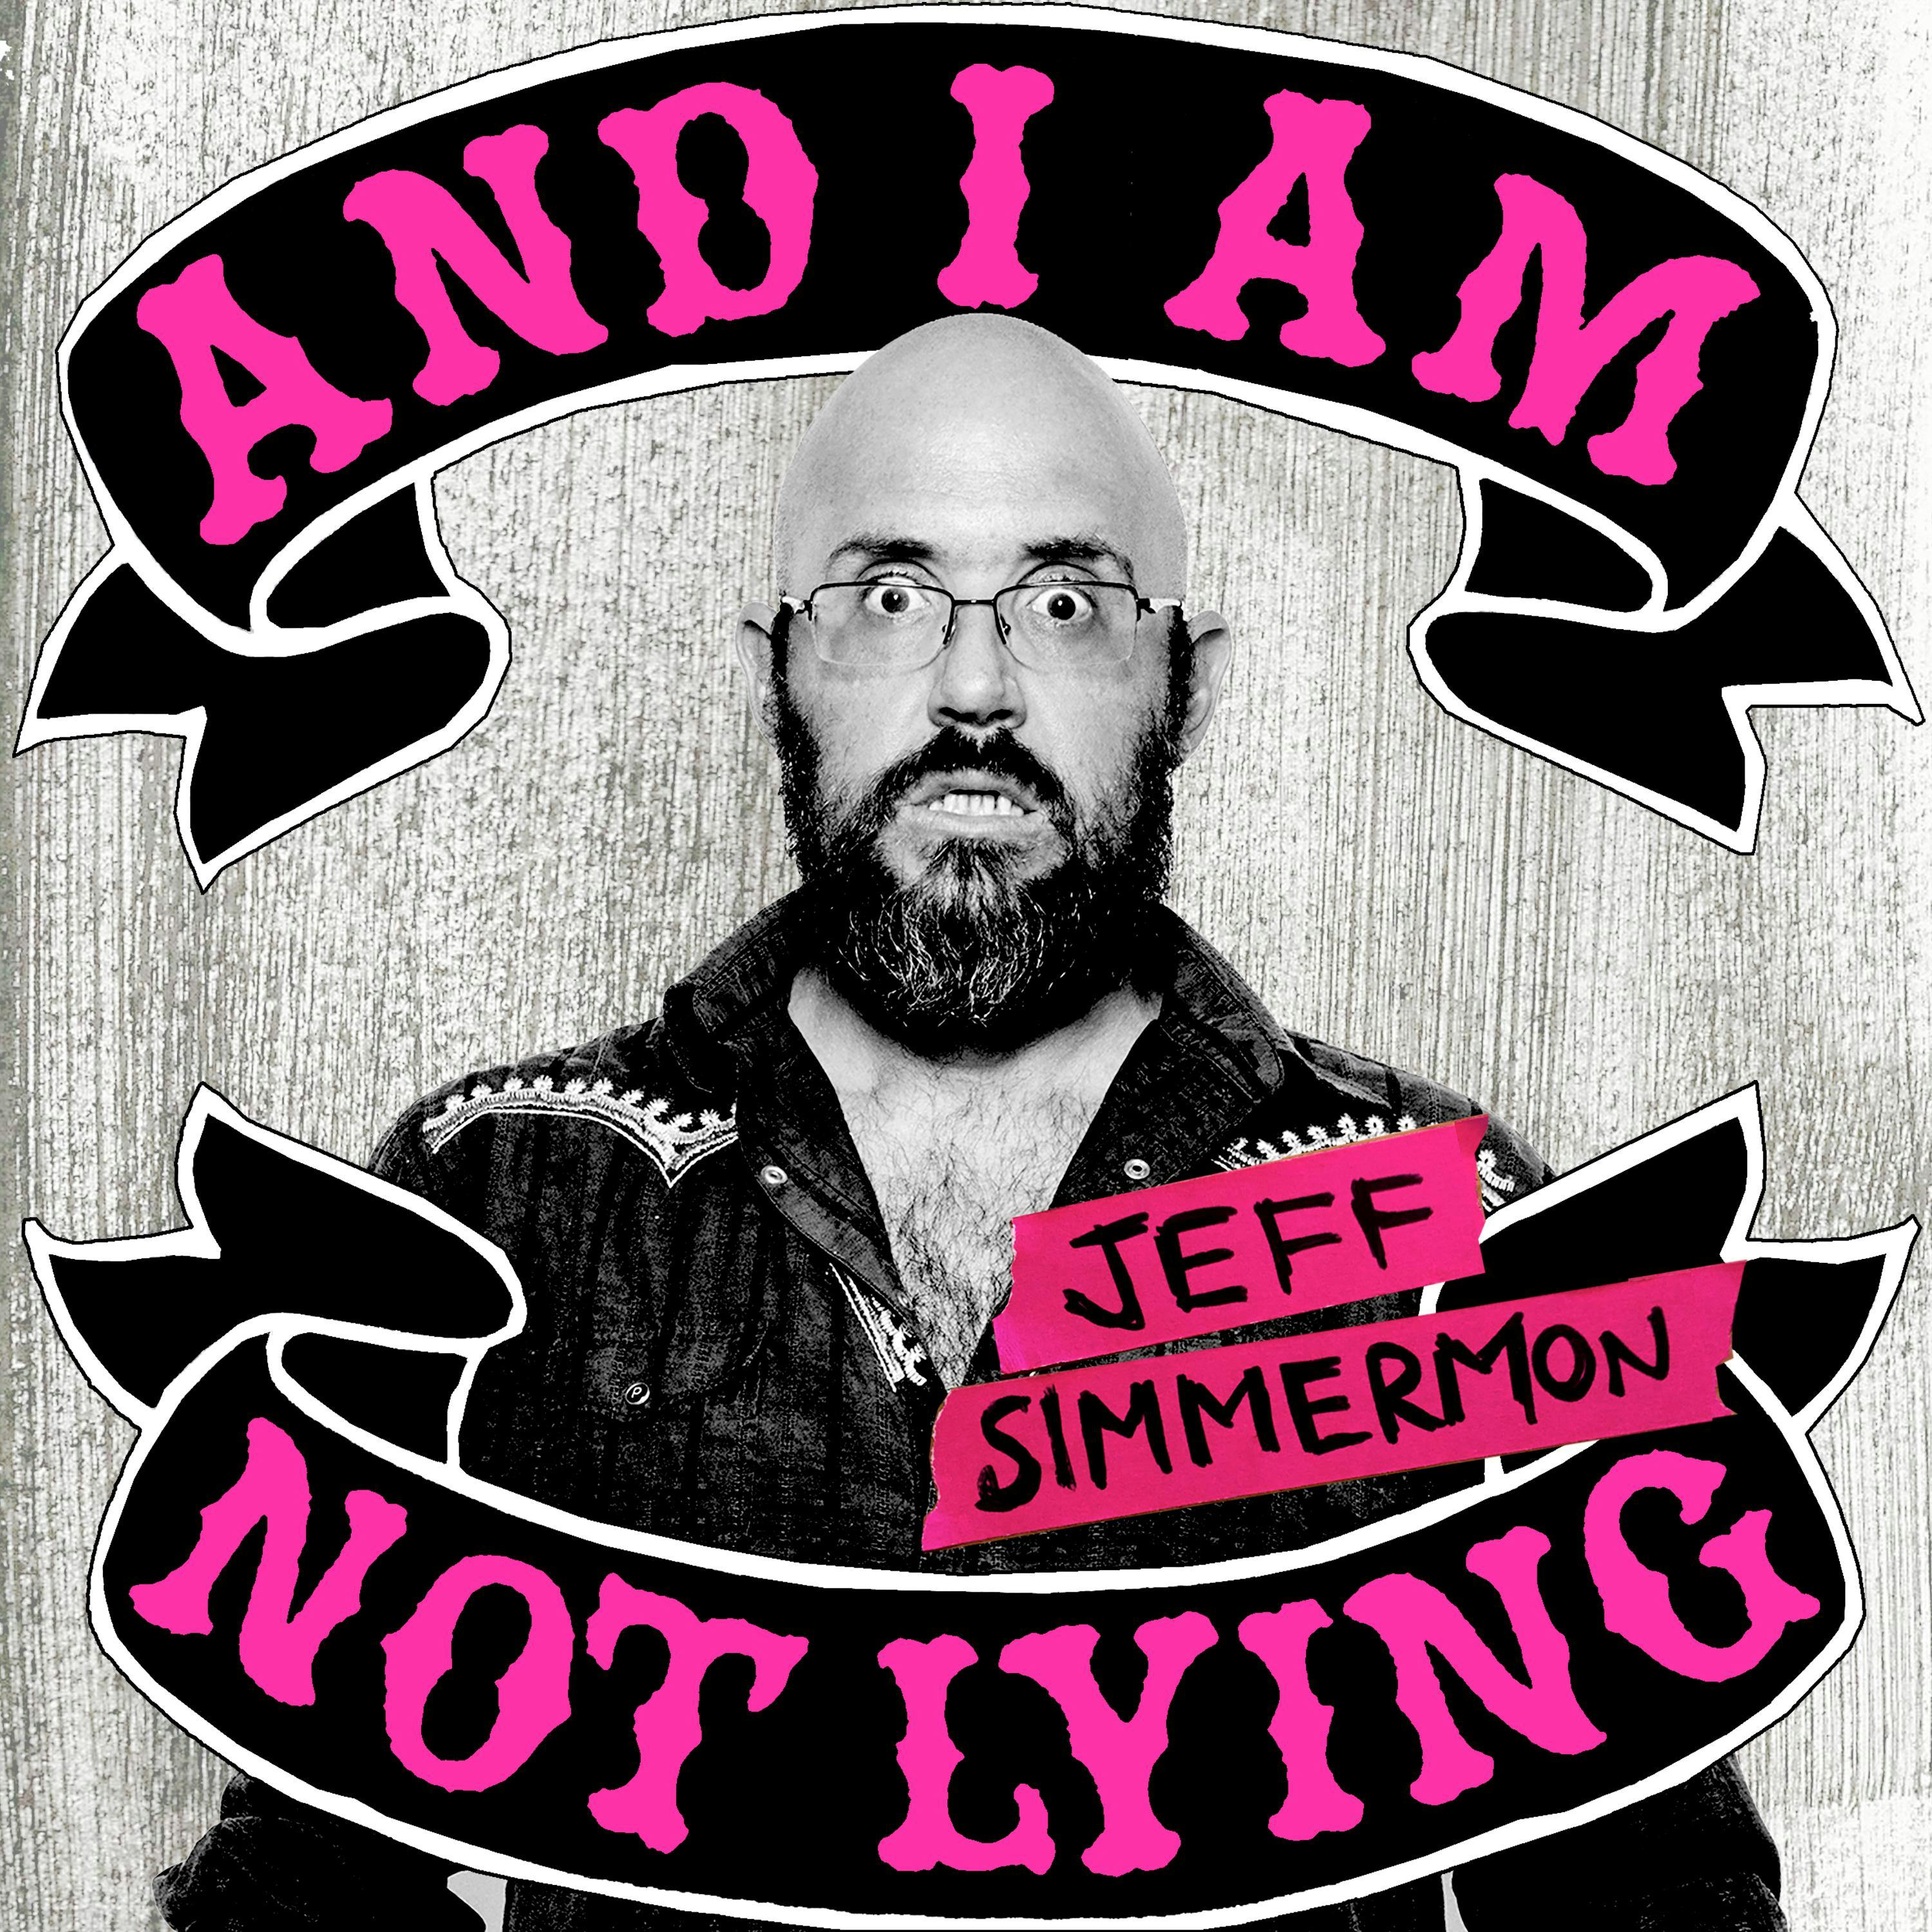 Jeff Simmermon: And I Am Not Lying - Jeff Simmermon